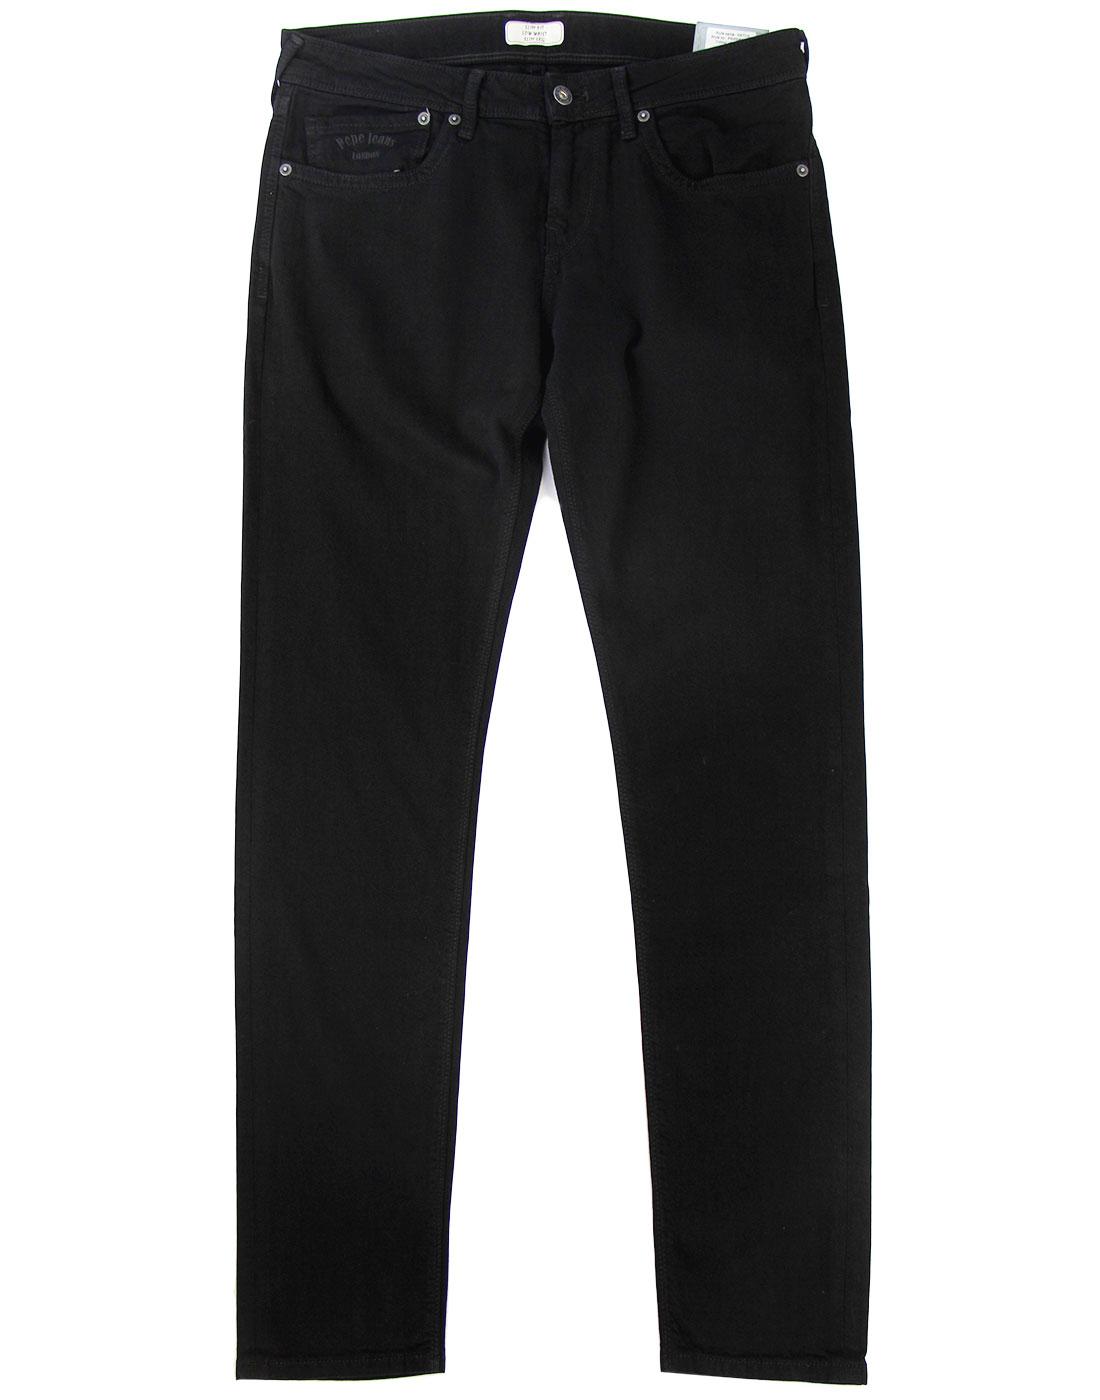 Hatch PEPE Retro Mod Slim Fit Black Denim Jeans